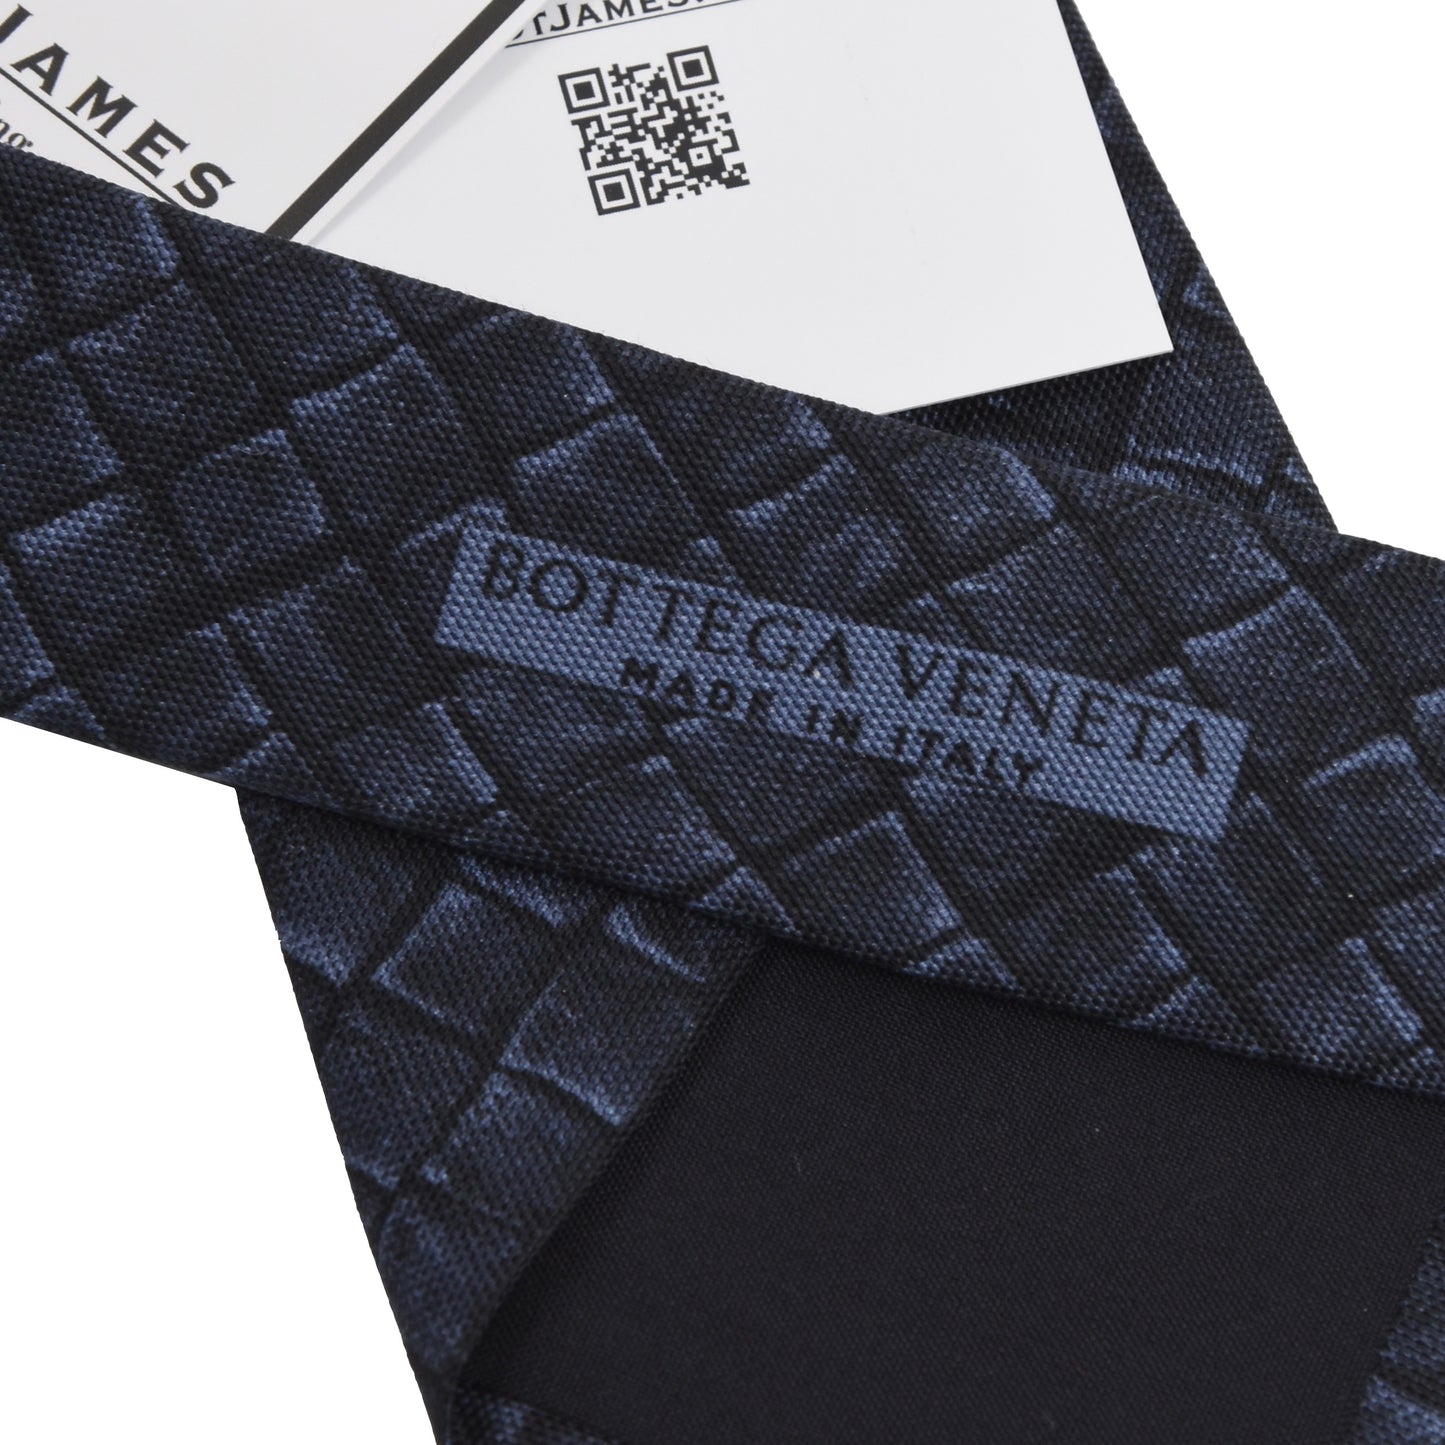 Bottega Veneta Printed Silk Tie - Navy/Black